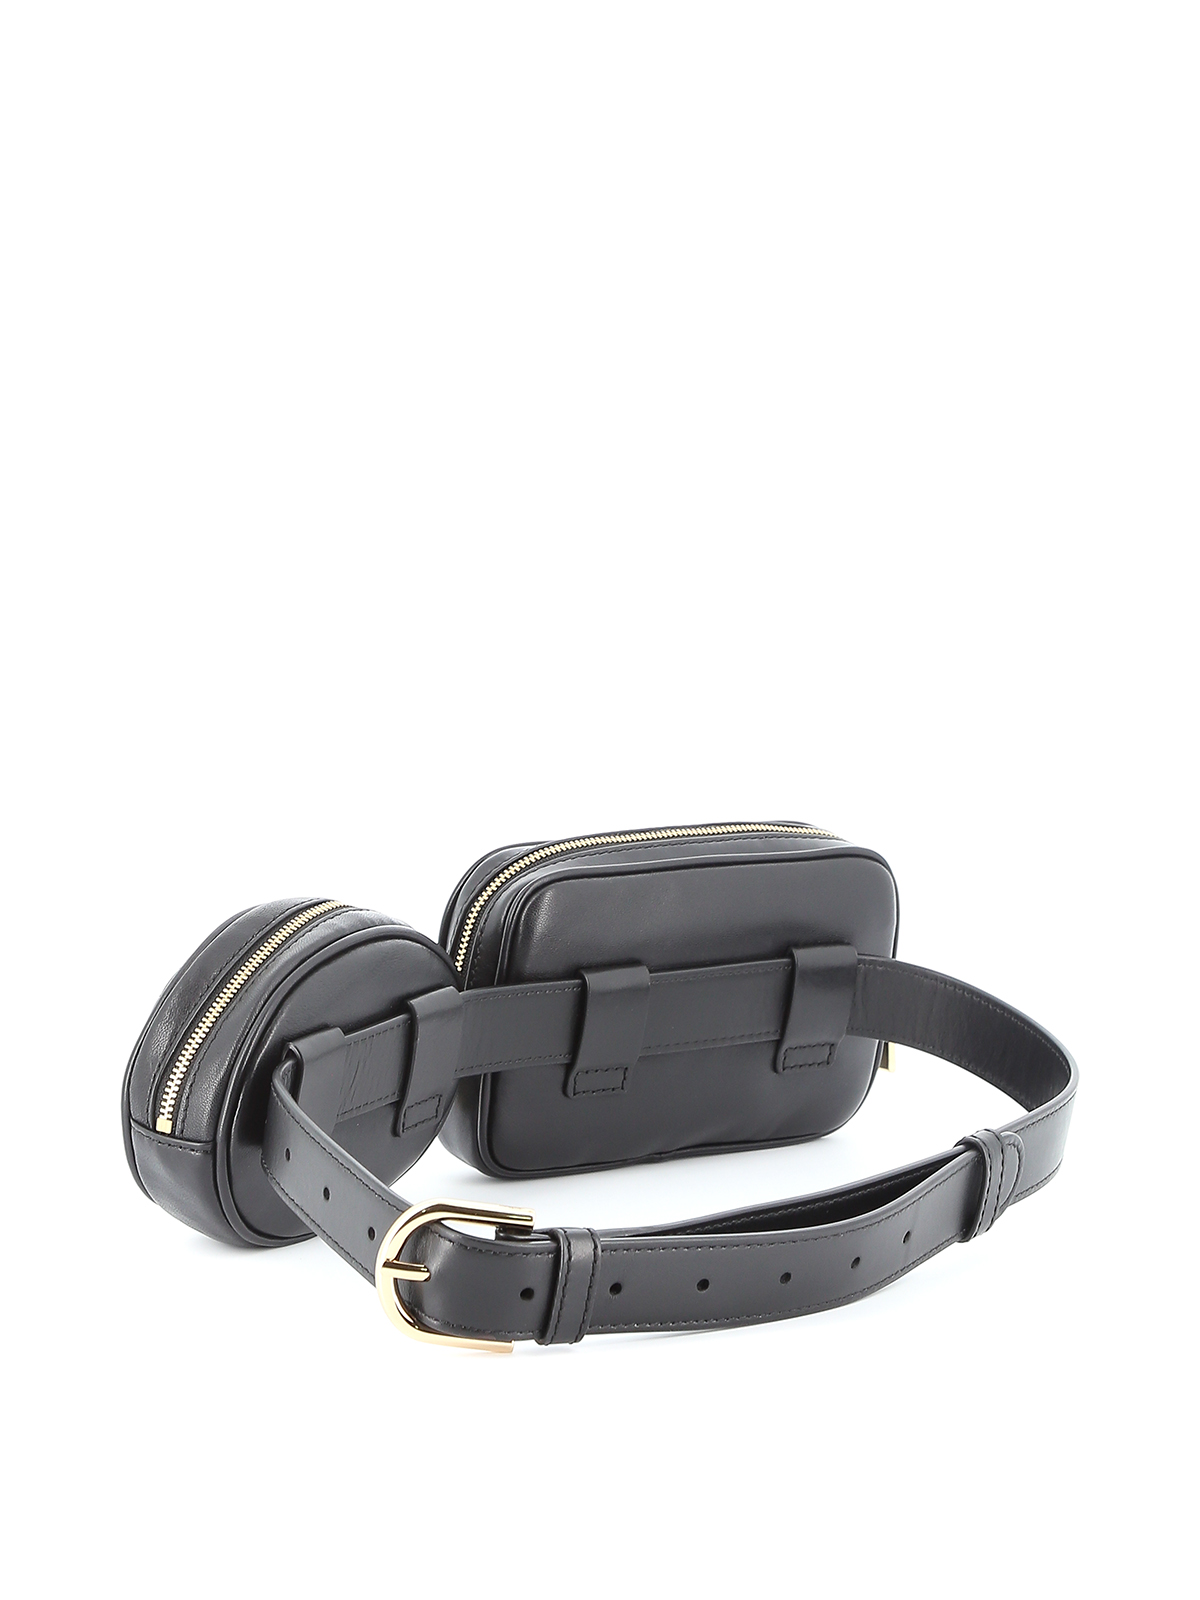 Michael Kors Women's Brown/Red Belt Bag | Red belt, Belt bag, Bags